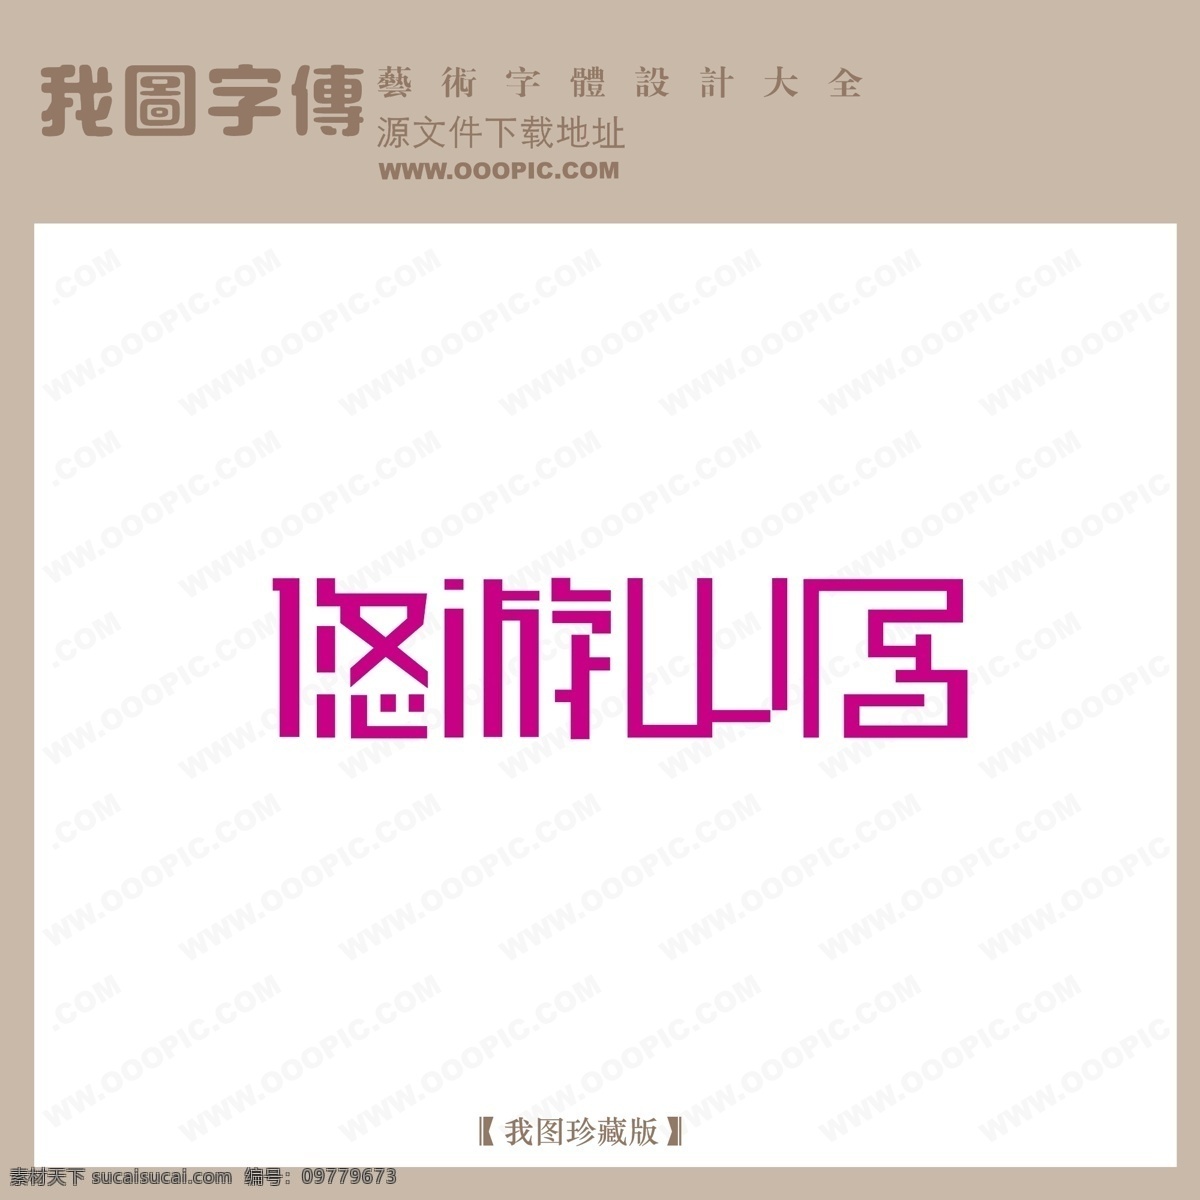 logo 艺术 字 创意艺术字 艺术字 艺术字设计 中文 现代艺术 字体设计 字体 设计艺术 悠游山居 矢量图